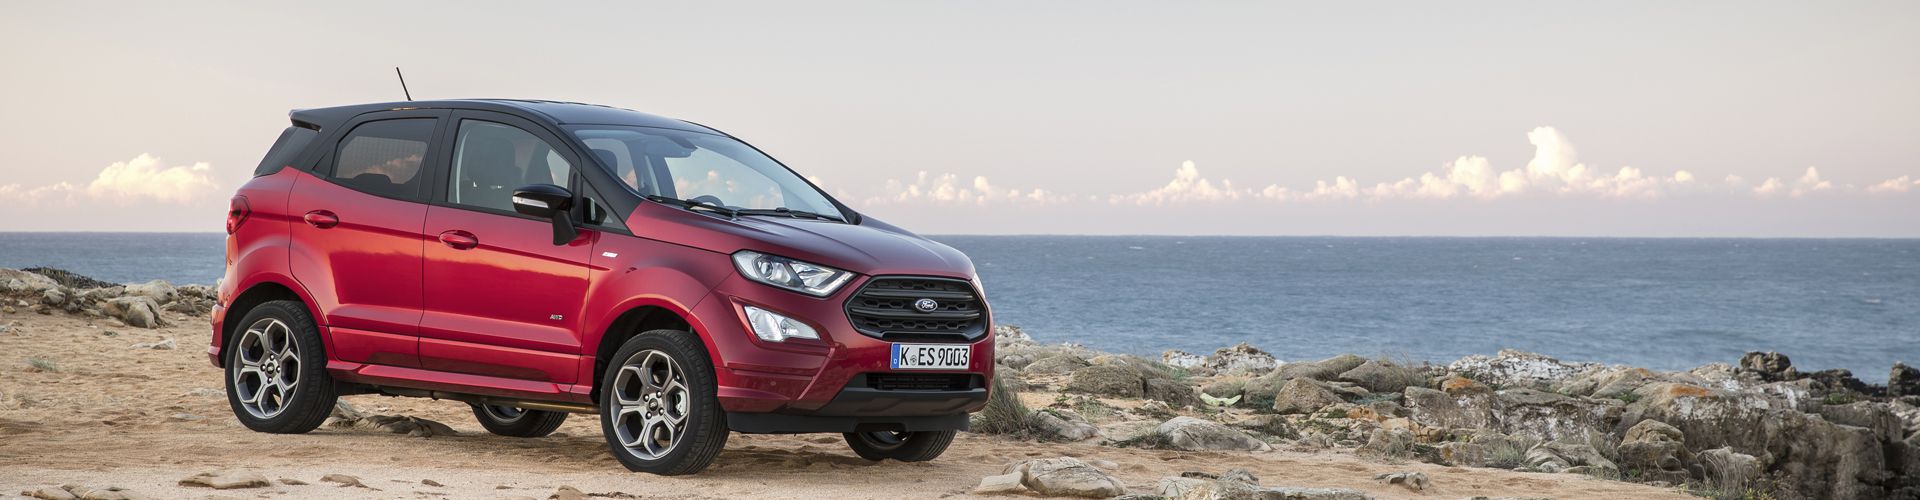 Ford Ecosport - Αφοί Α